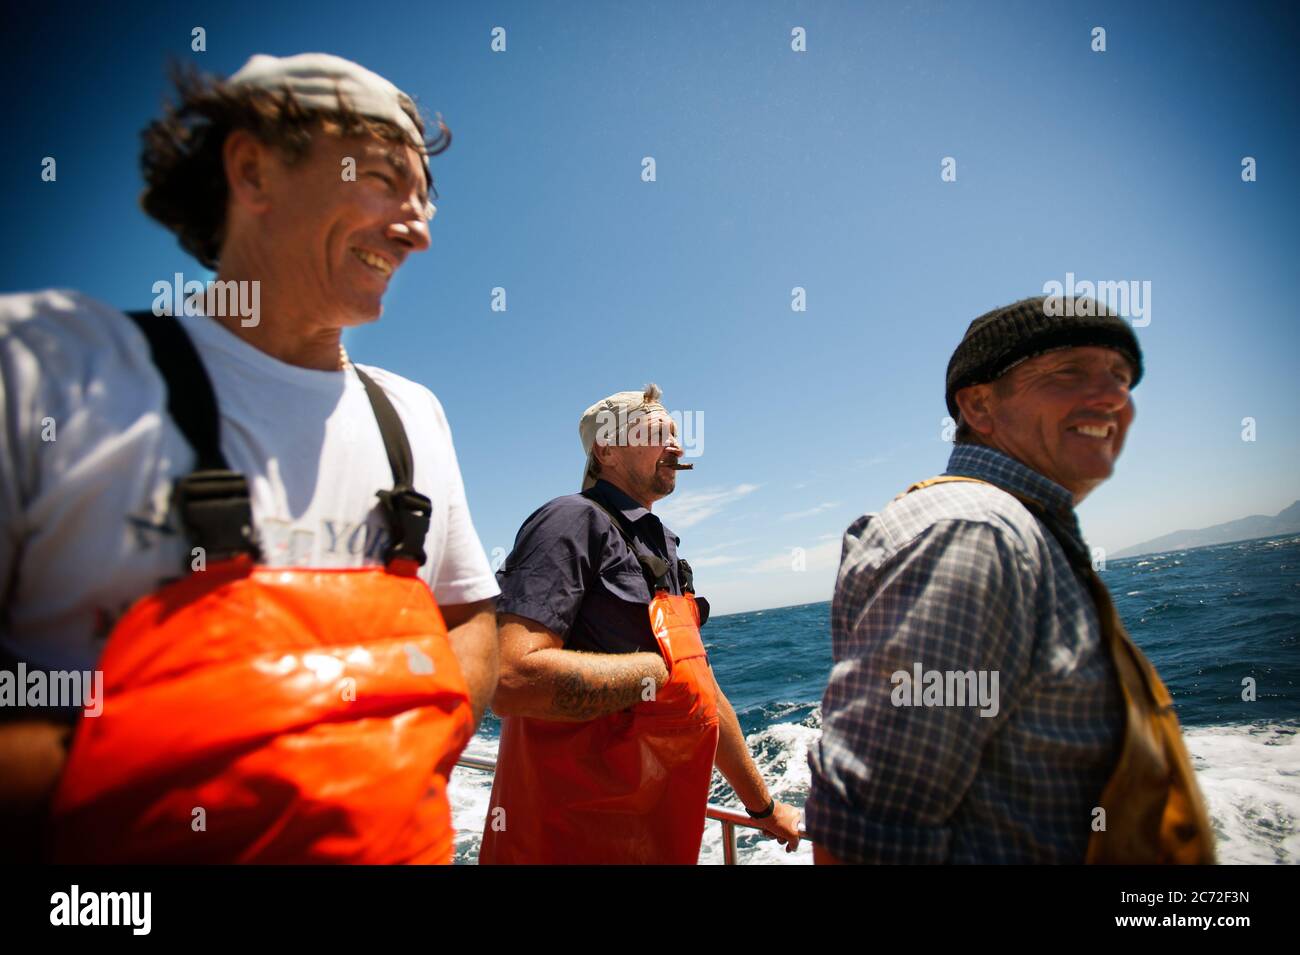 From left to right: Antonio Gomez (a.k.a El Capi), Antonio Dominguez (a.k.a Nono) and Jose Luis Ribella (a.k.a Cosco) talk on the deck of the Fernandez y Moreno fishing boat. Stock Photo